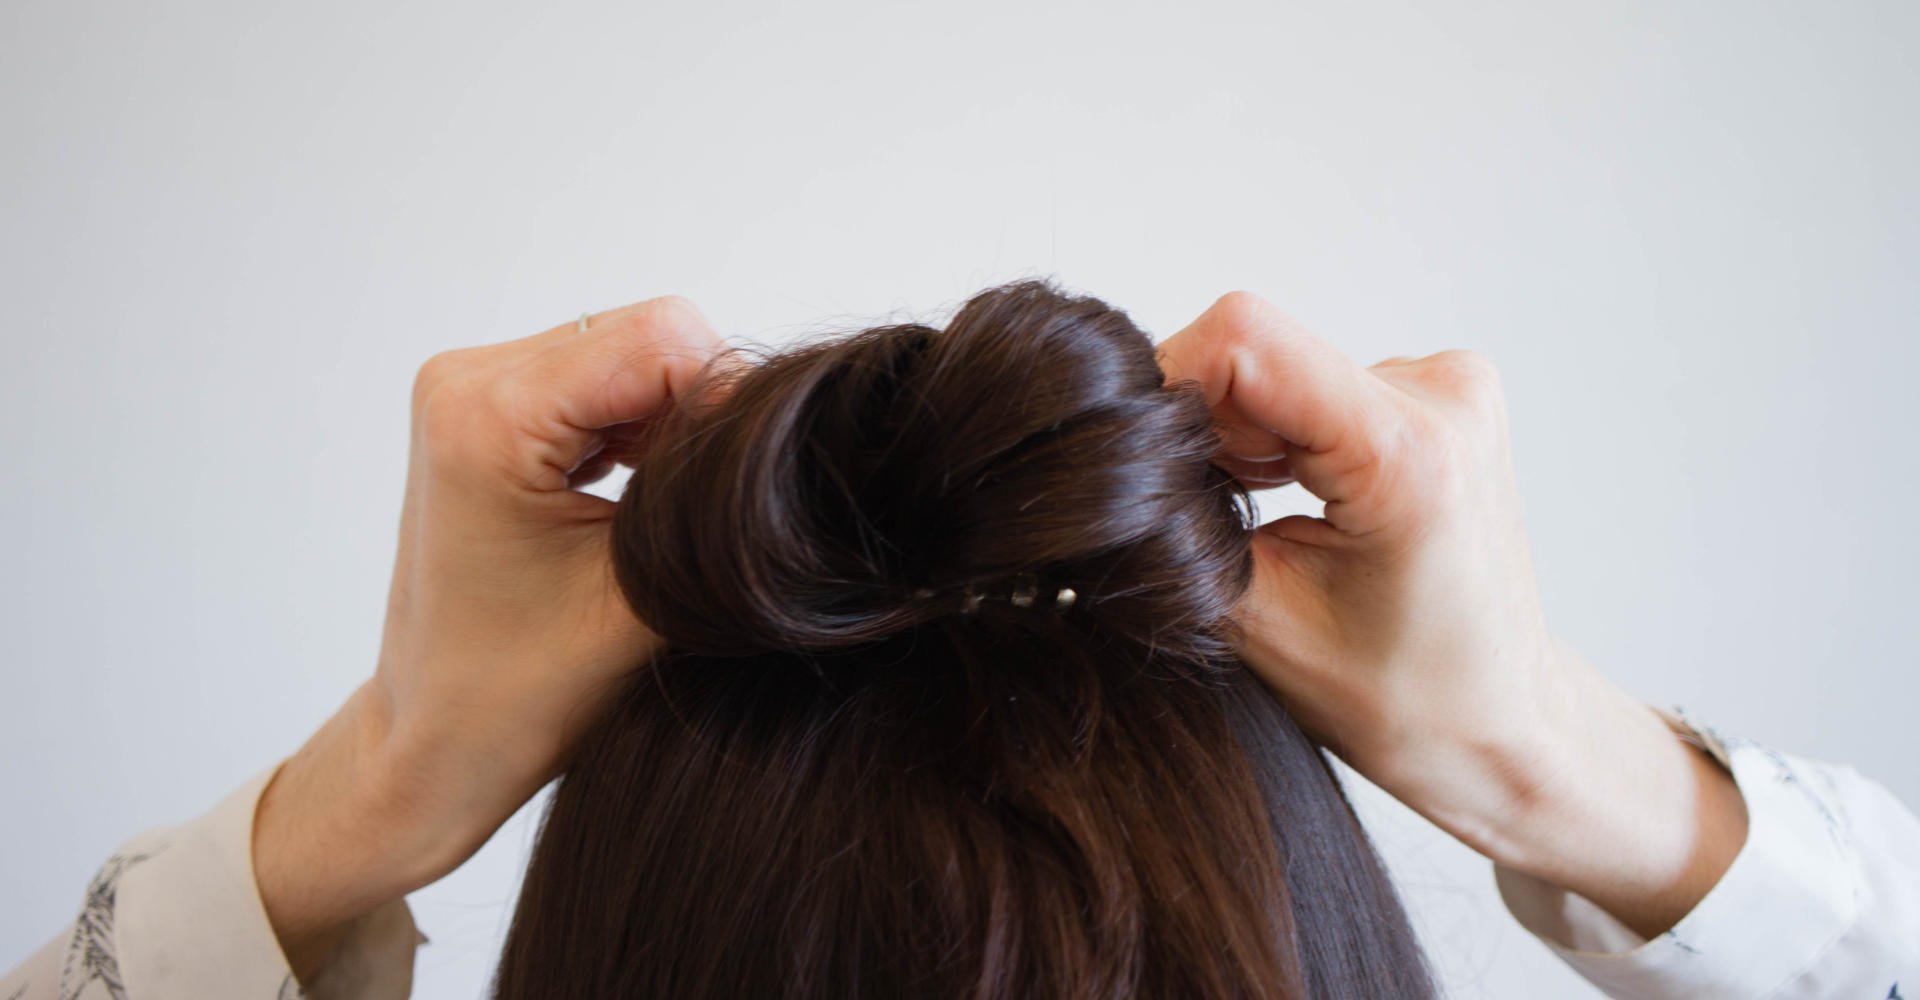 Coque abacaxi ou half bun: qual penteado para cabelo cacheado ou crespo é o  mais bonito? Vote!| L'Oréal Paris